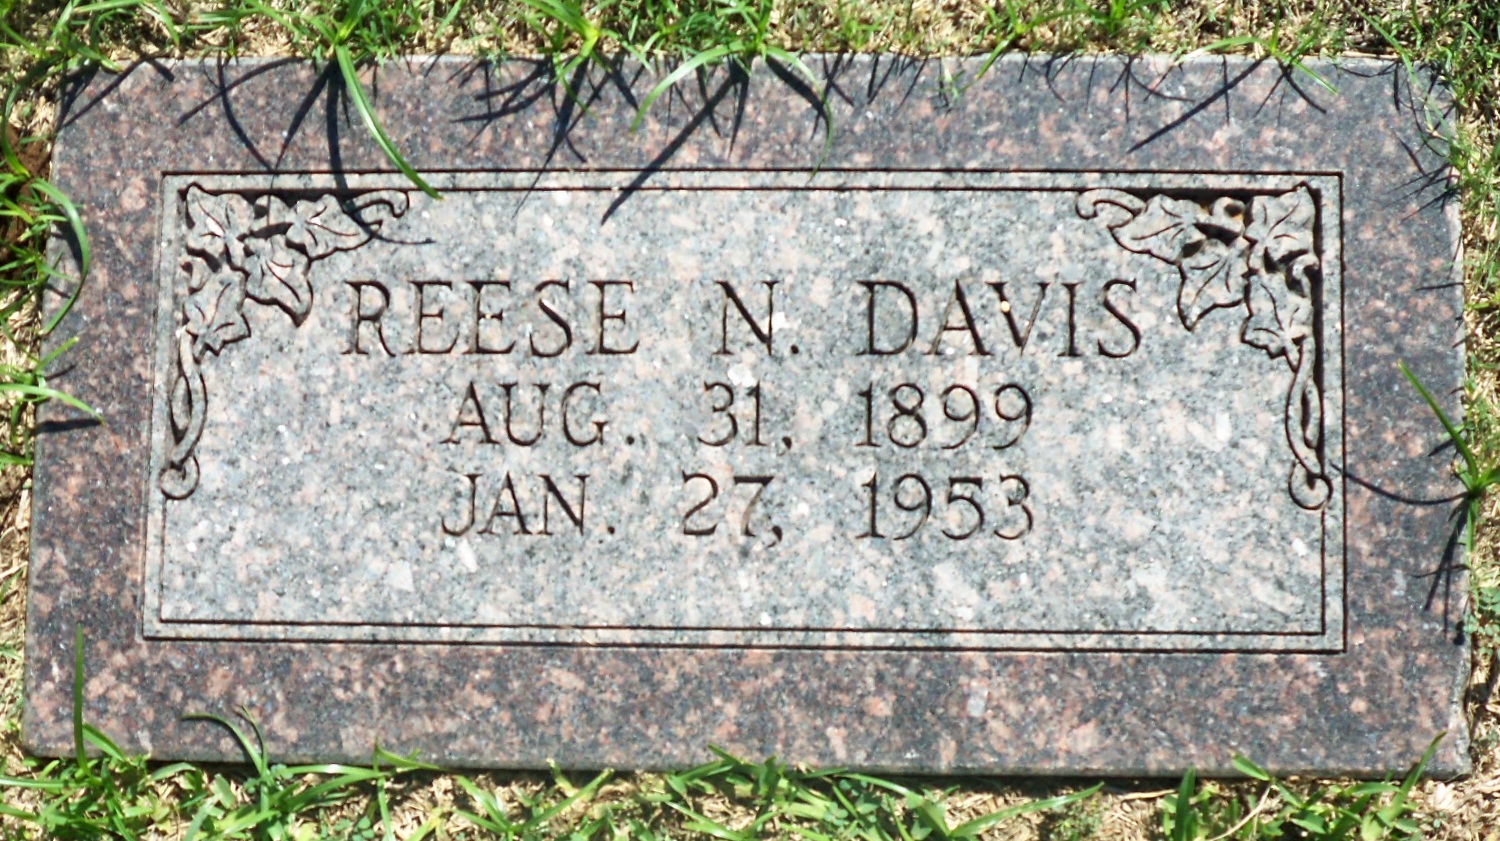 Reese N. Davis 1899-1953 husband of Dollie Driskell Davis